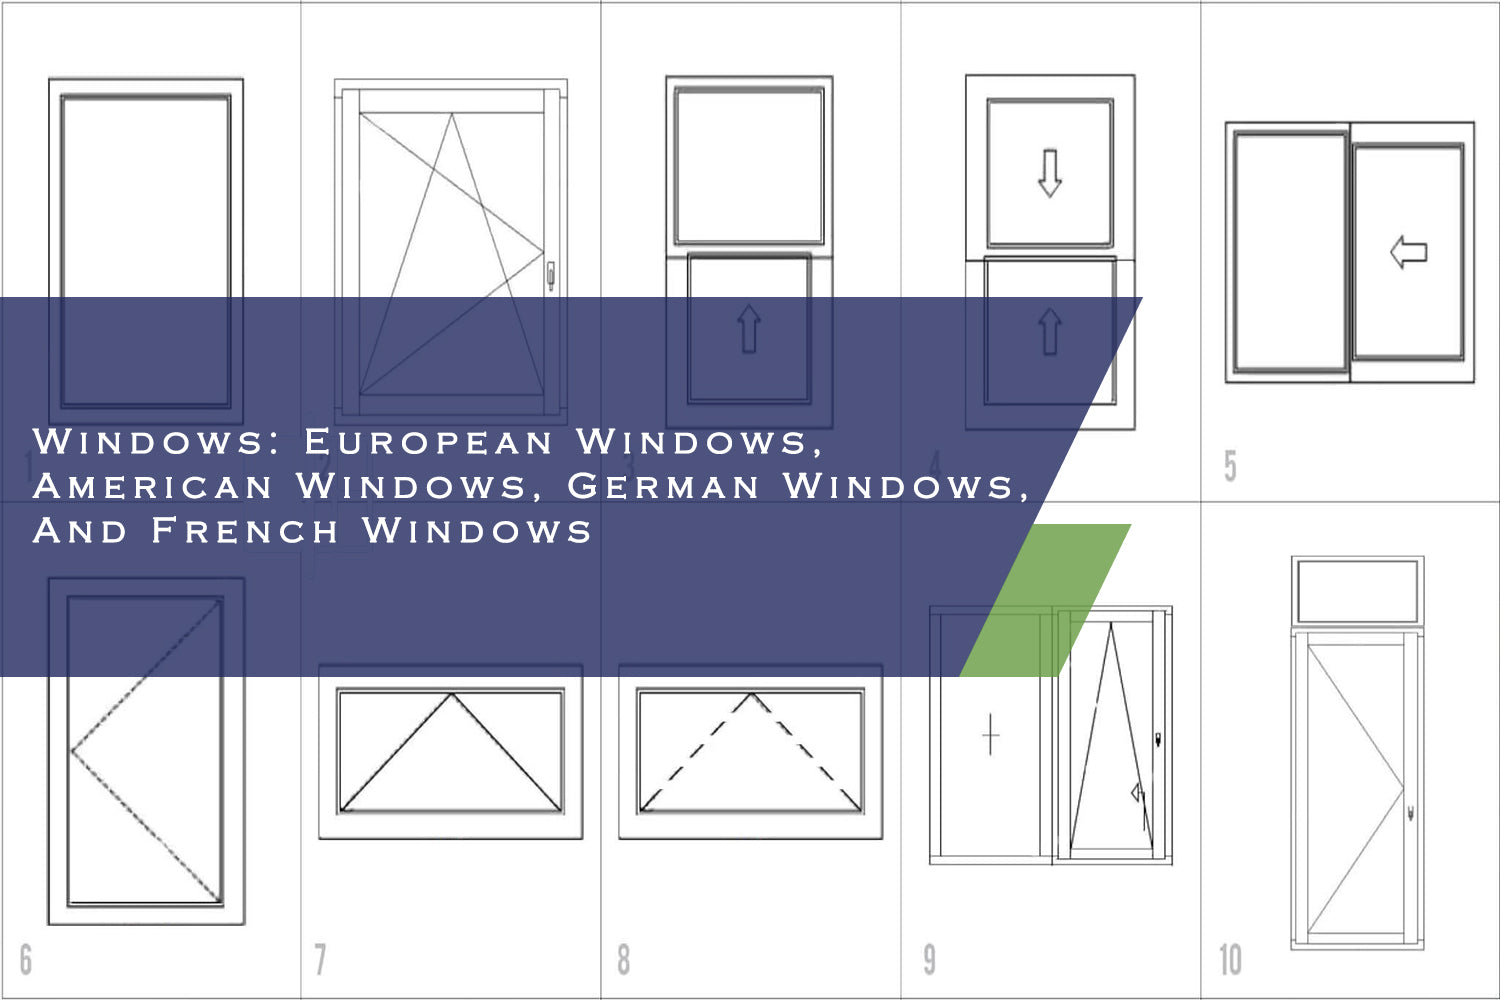 4 Types of Windows: European Windows, American Windows, German Windows, And French Windows